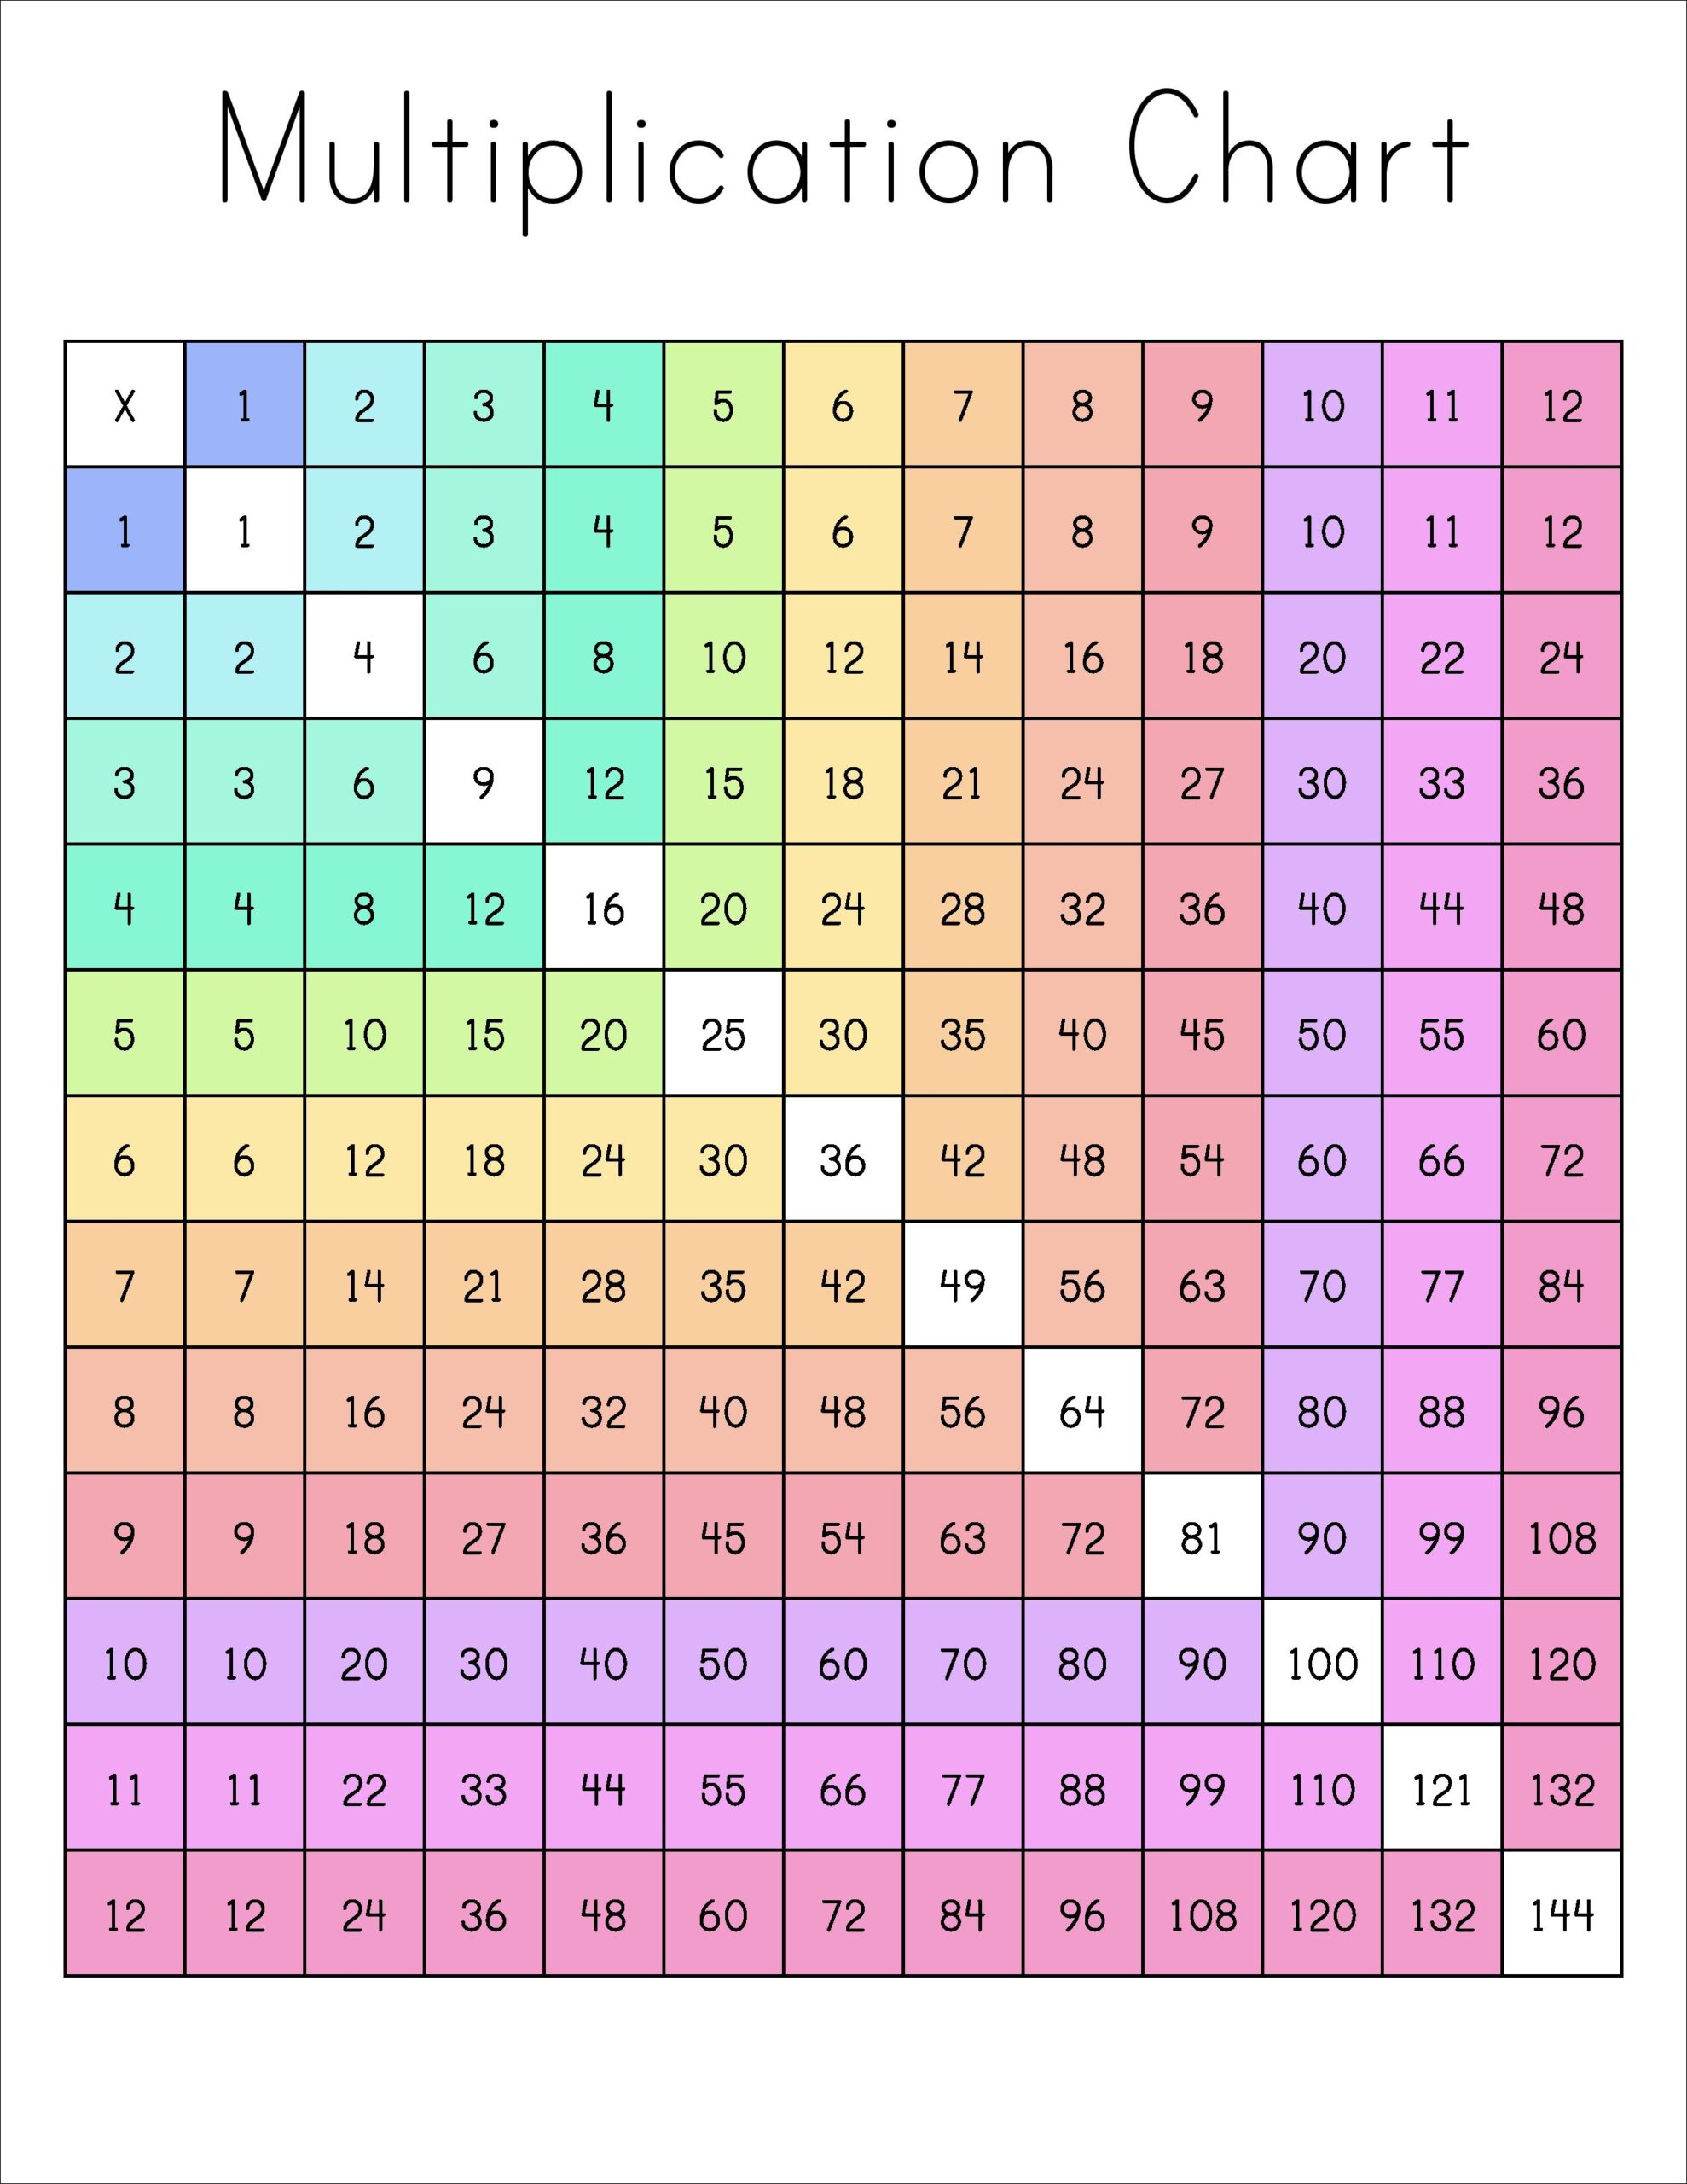 free-multiplication-chart-printable-pretty-sweet